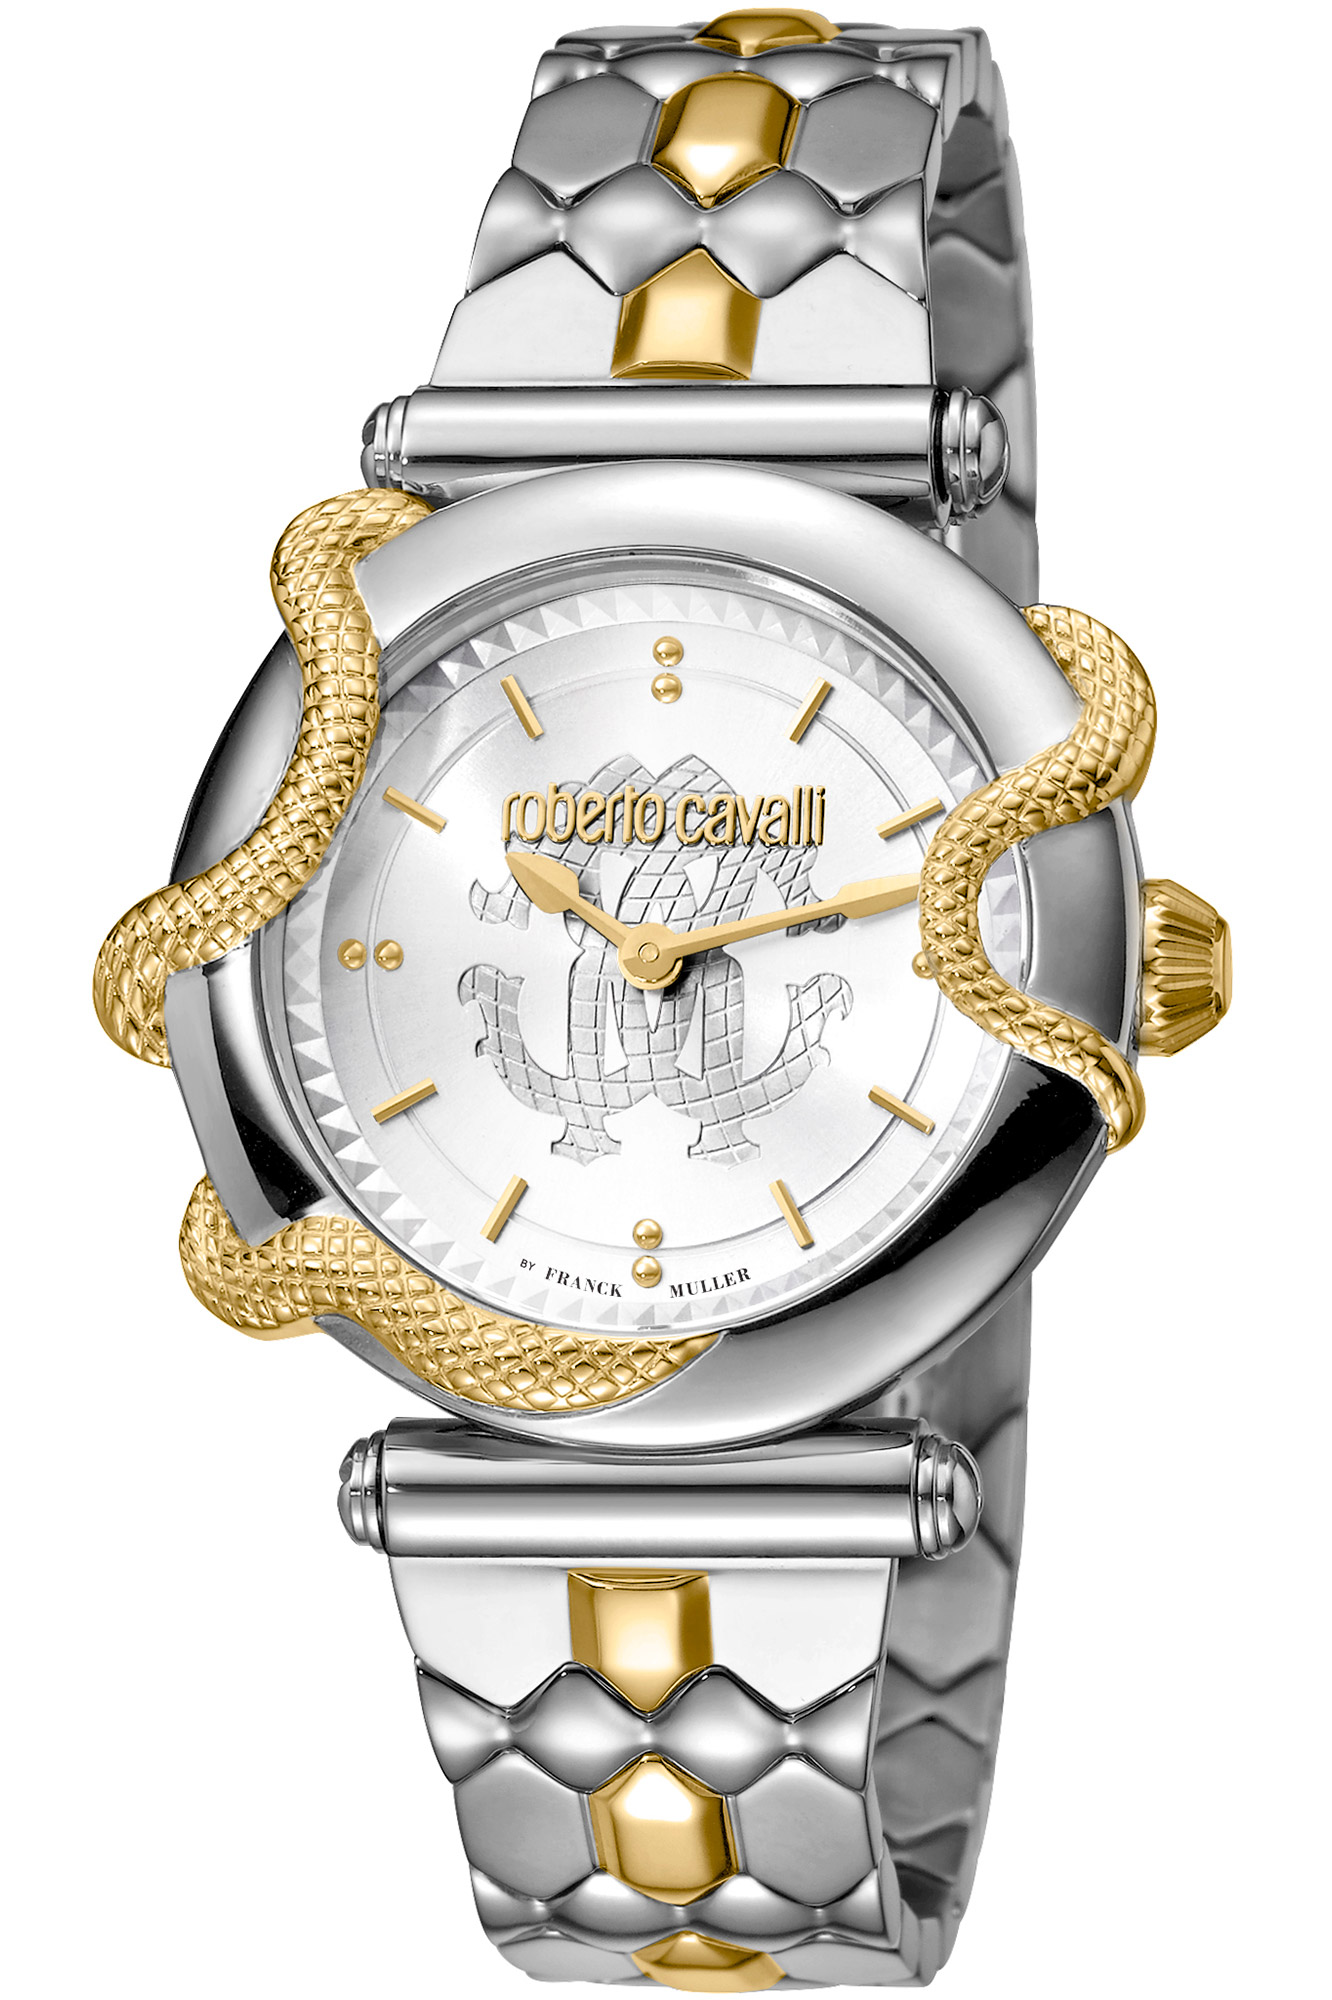 Reloj Roberto Cavalli by Franck Muller rv1l058m0091